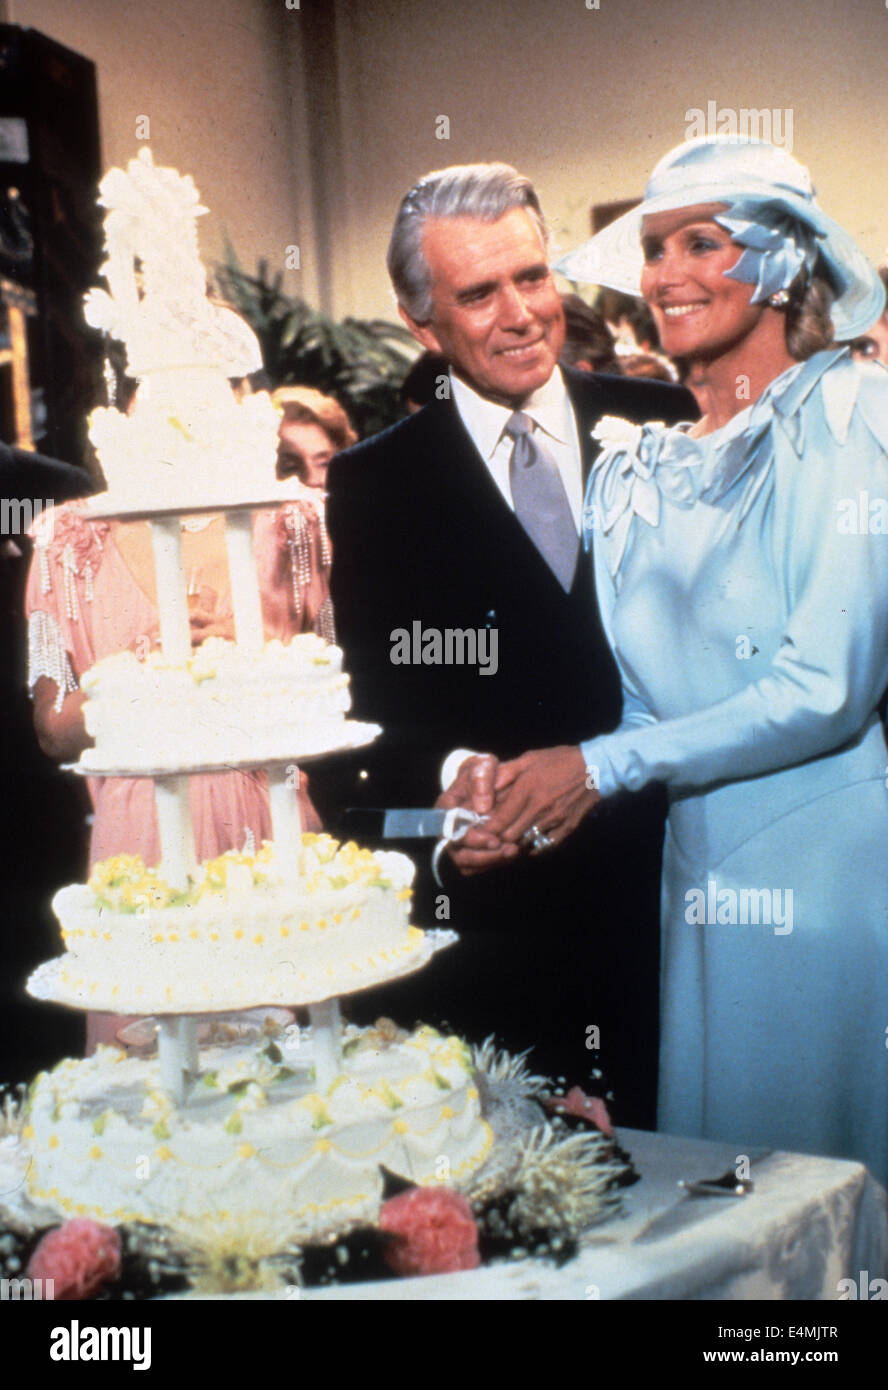 Dynastie Aaron Spelling US-Fernsehserie (1981-89) mit Linda Evans und John Forsythe Stockfoto